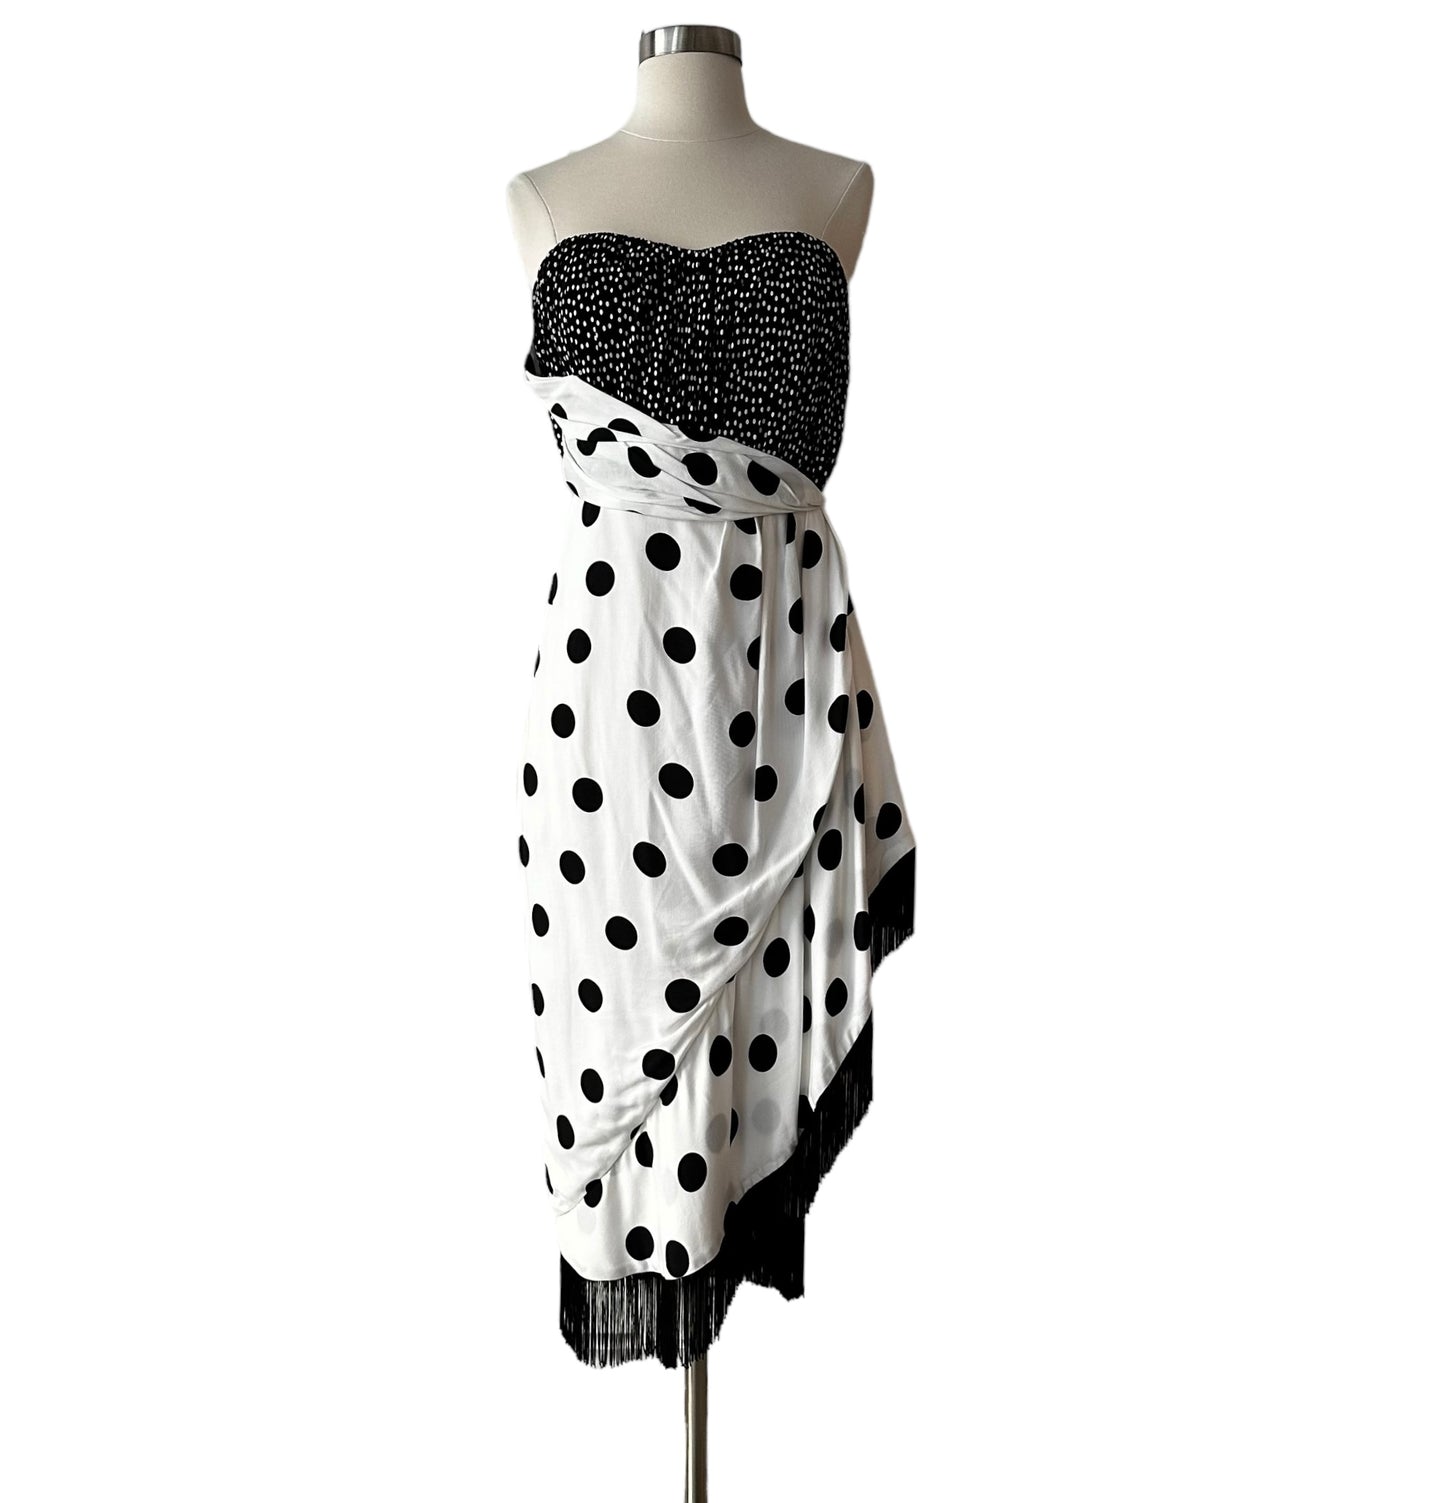 Strapless Black and White Polka Dot Dress - M